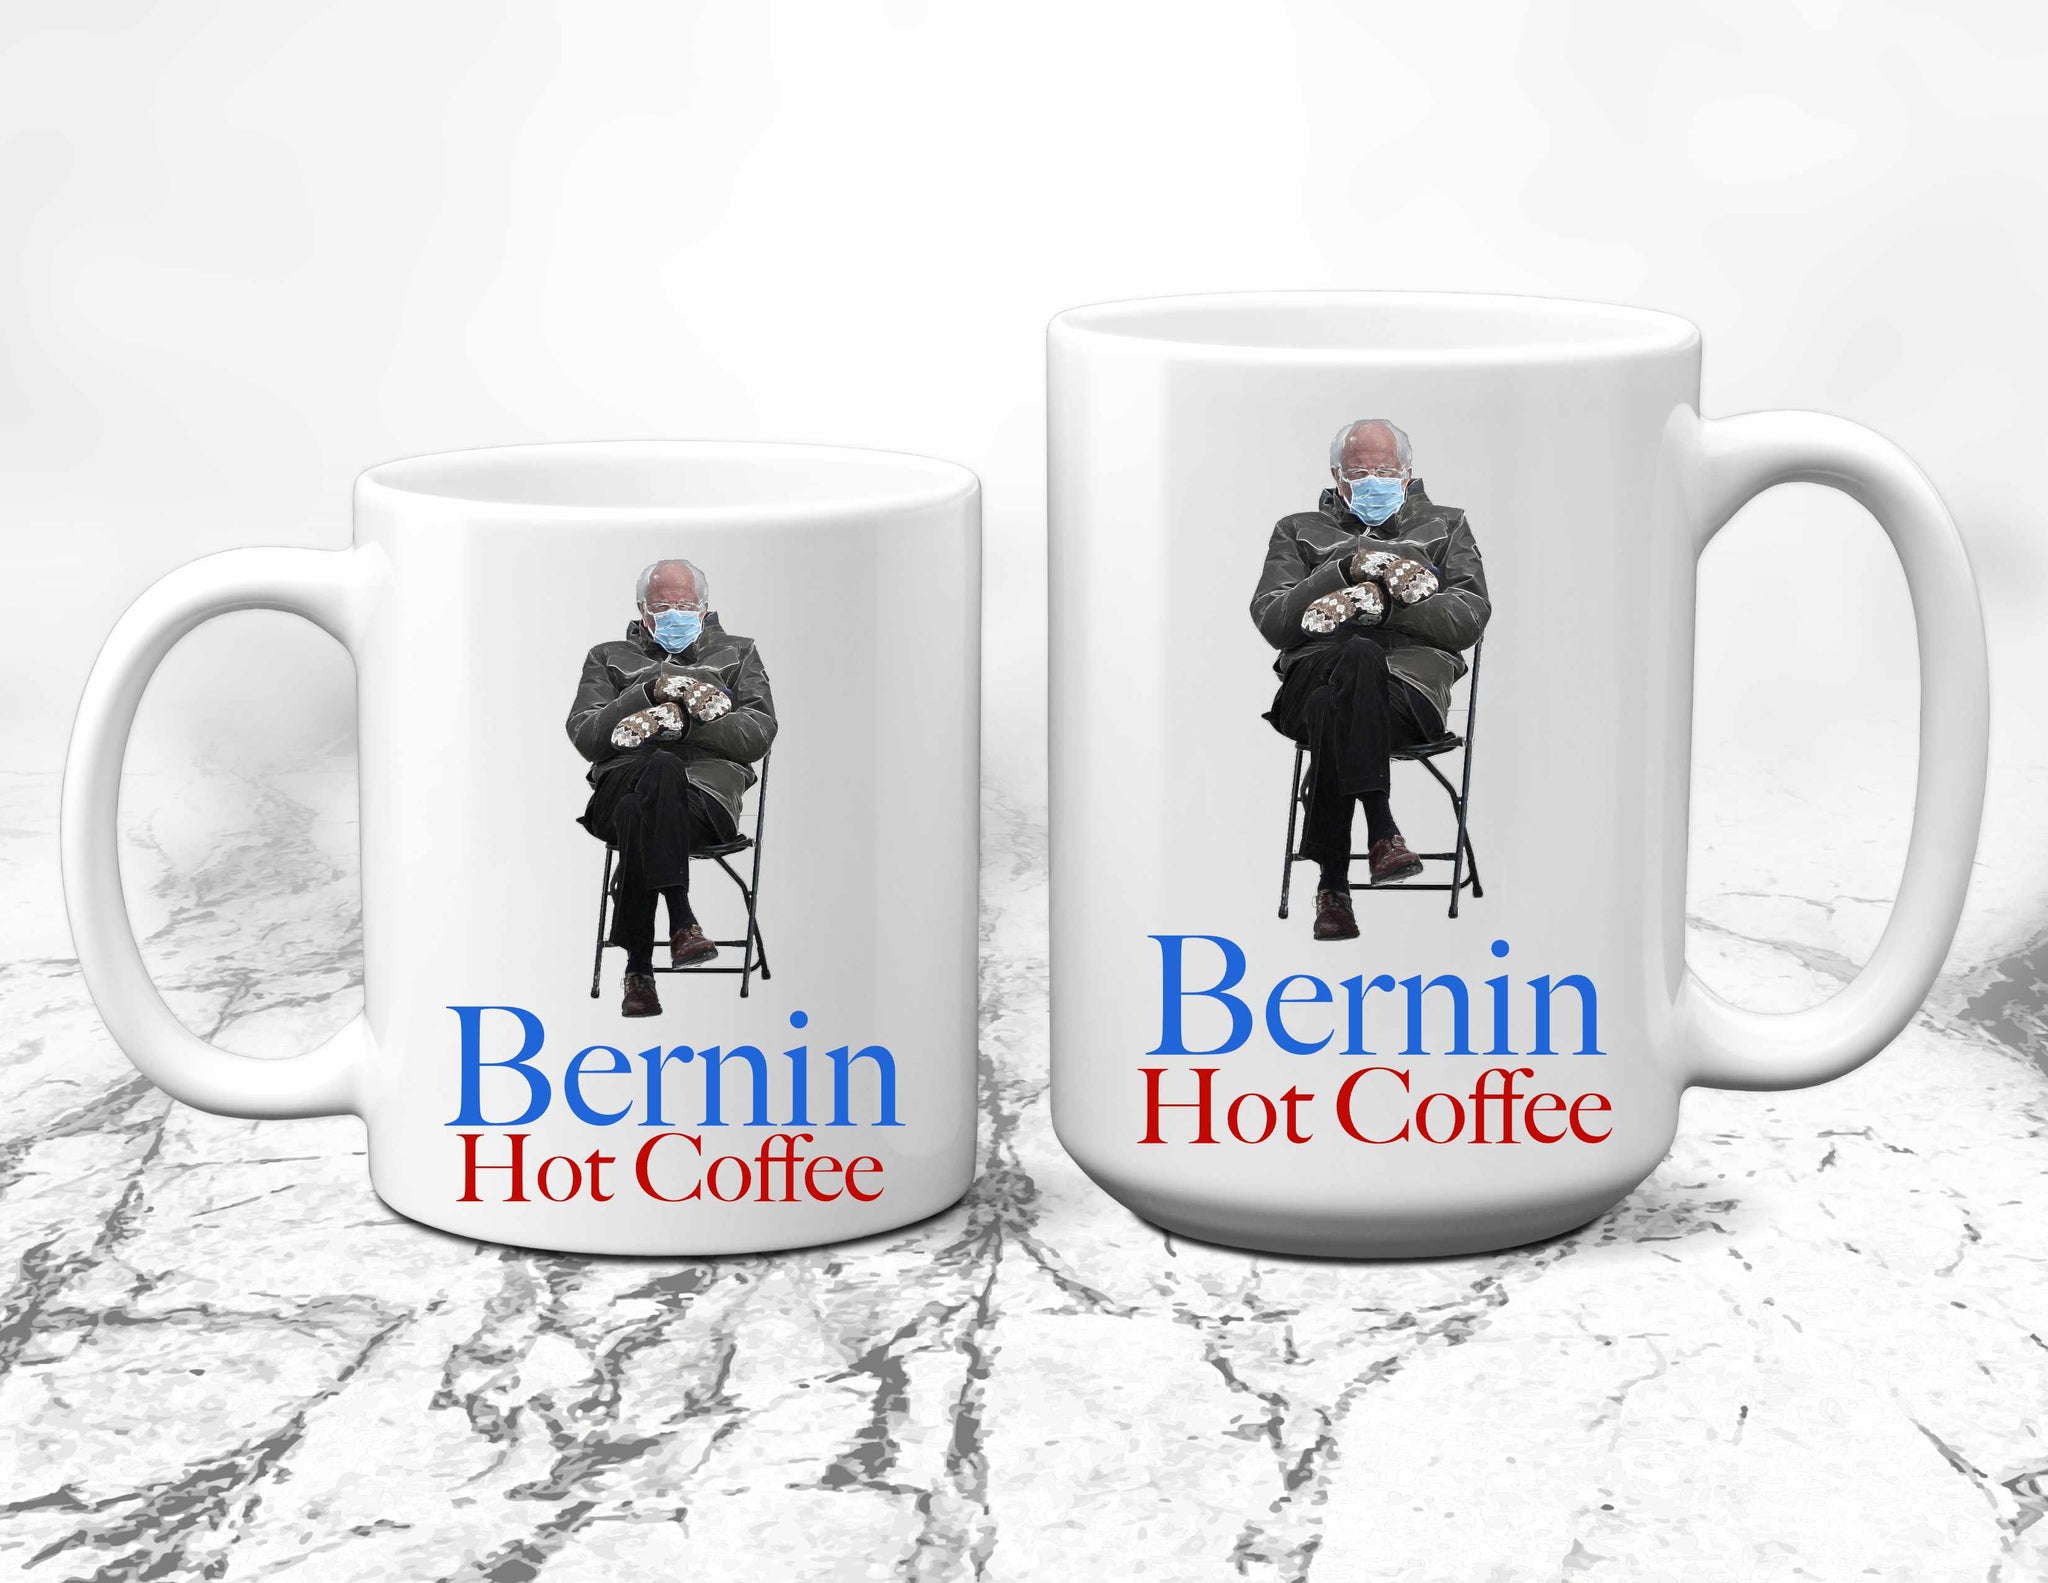 Bernin Hot Coffee Mug